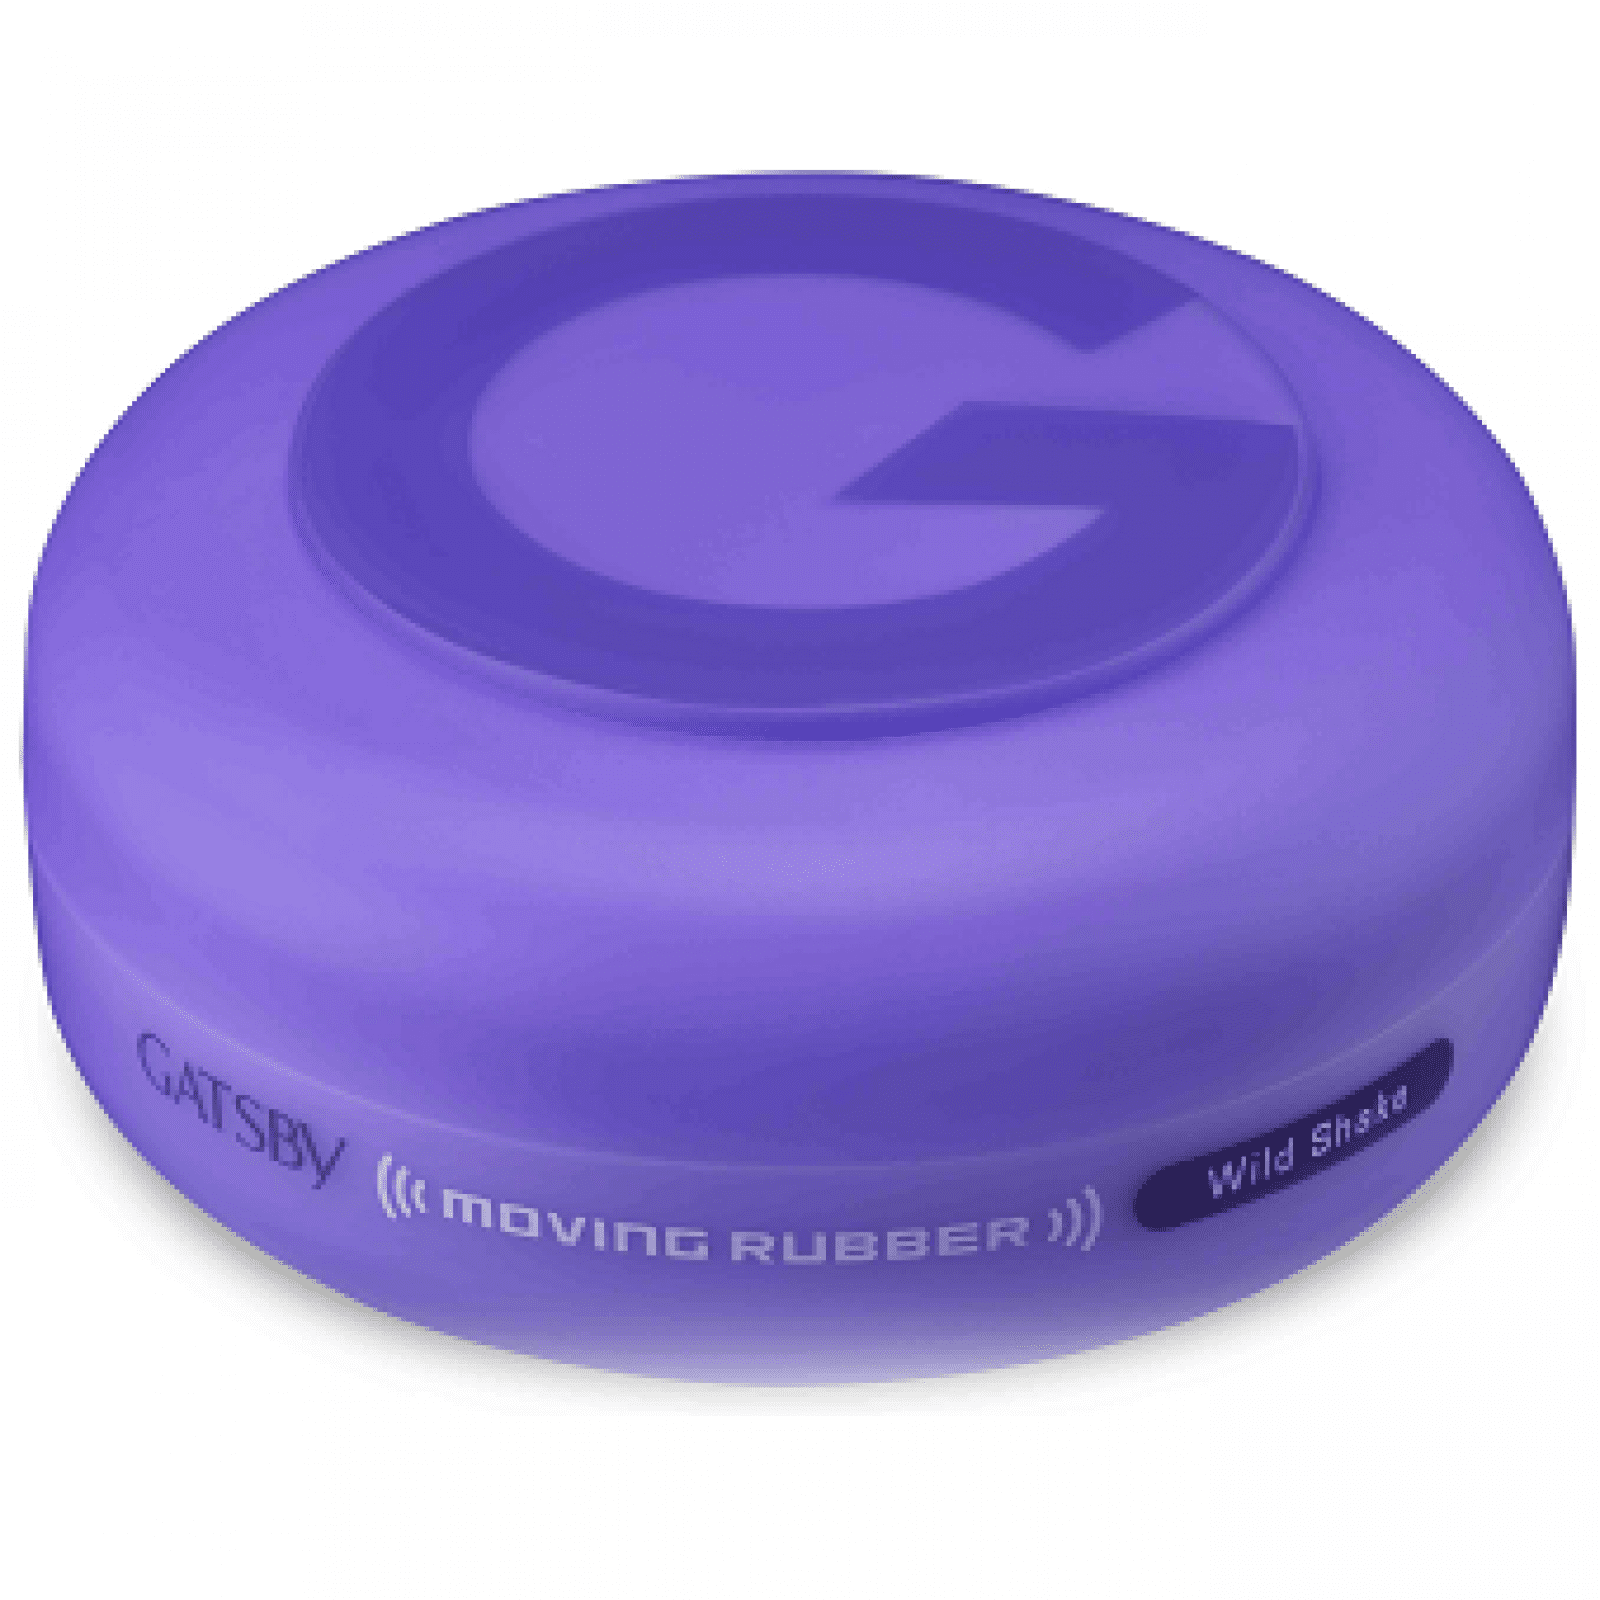 Gatsby Moving Rubber Hair Wax 80g - Wild Shake (Purple) 